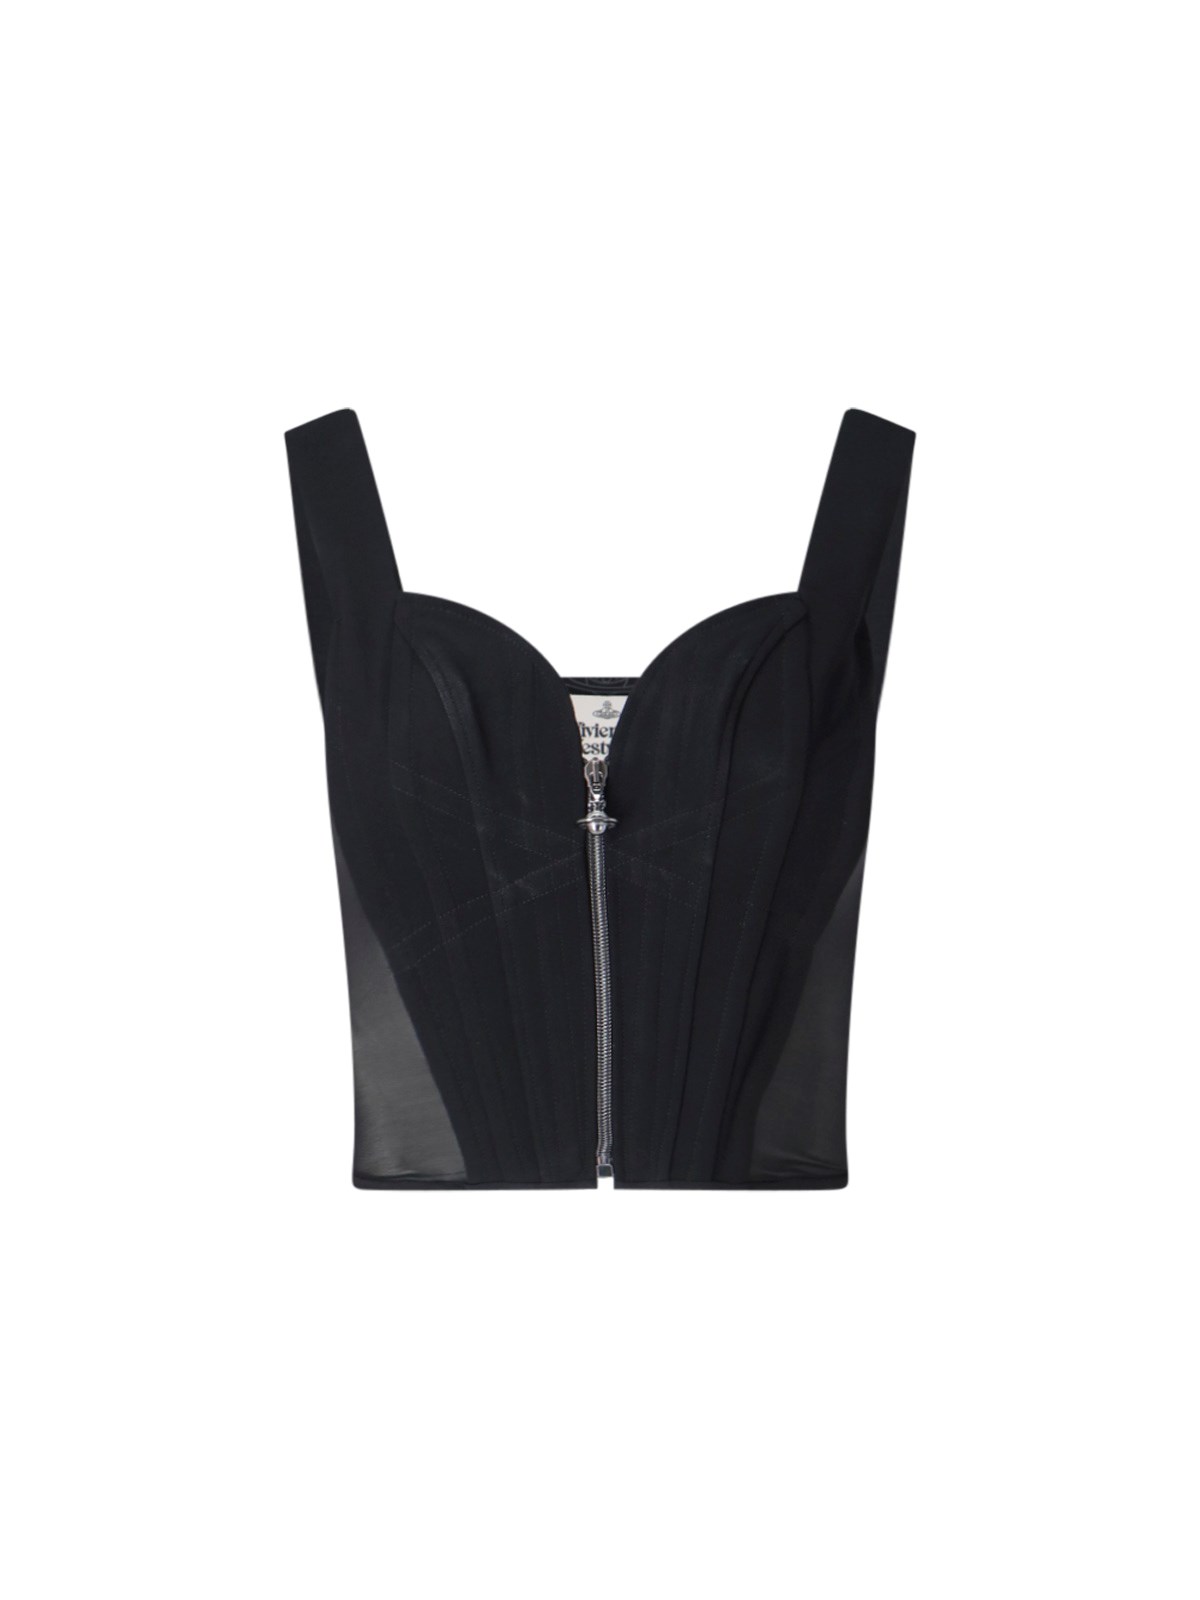 Vivienne Westwood Zip Corset In Black  